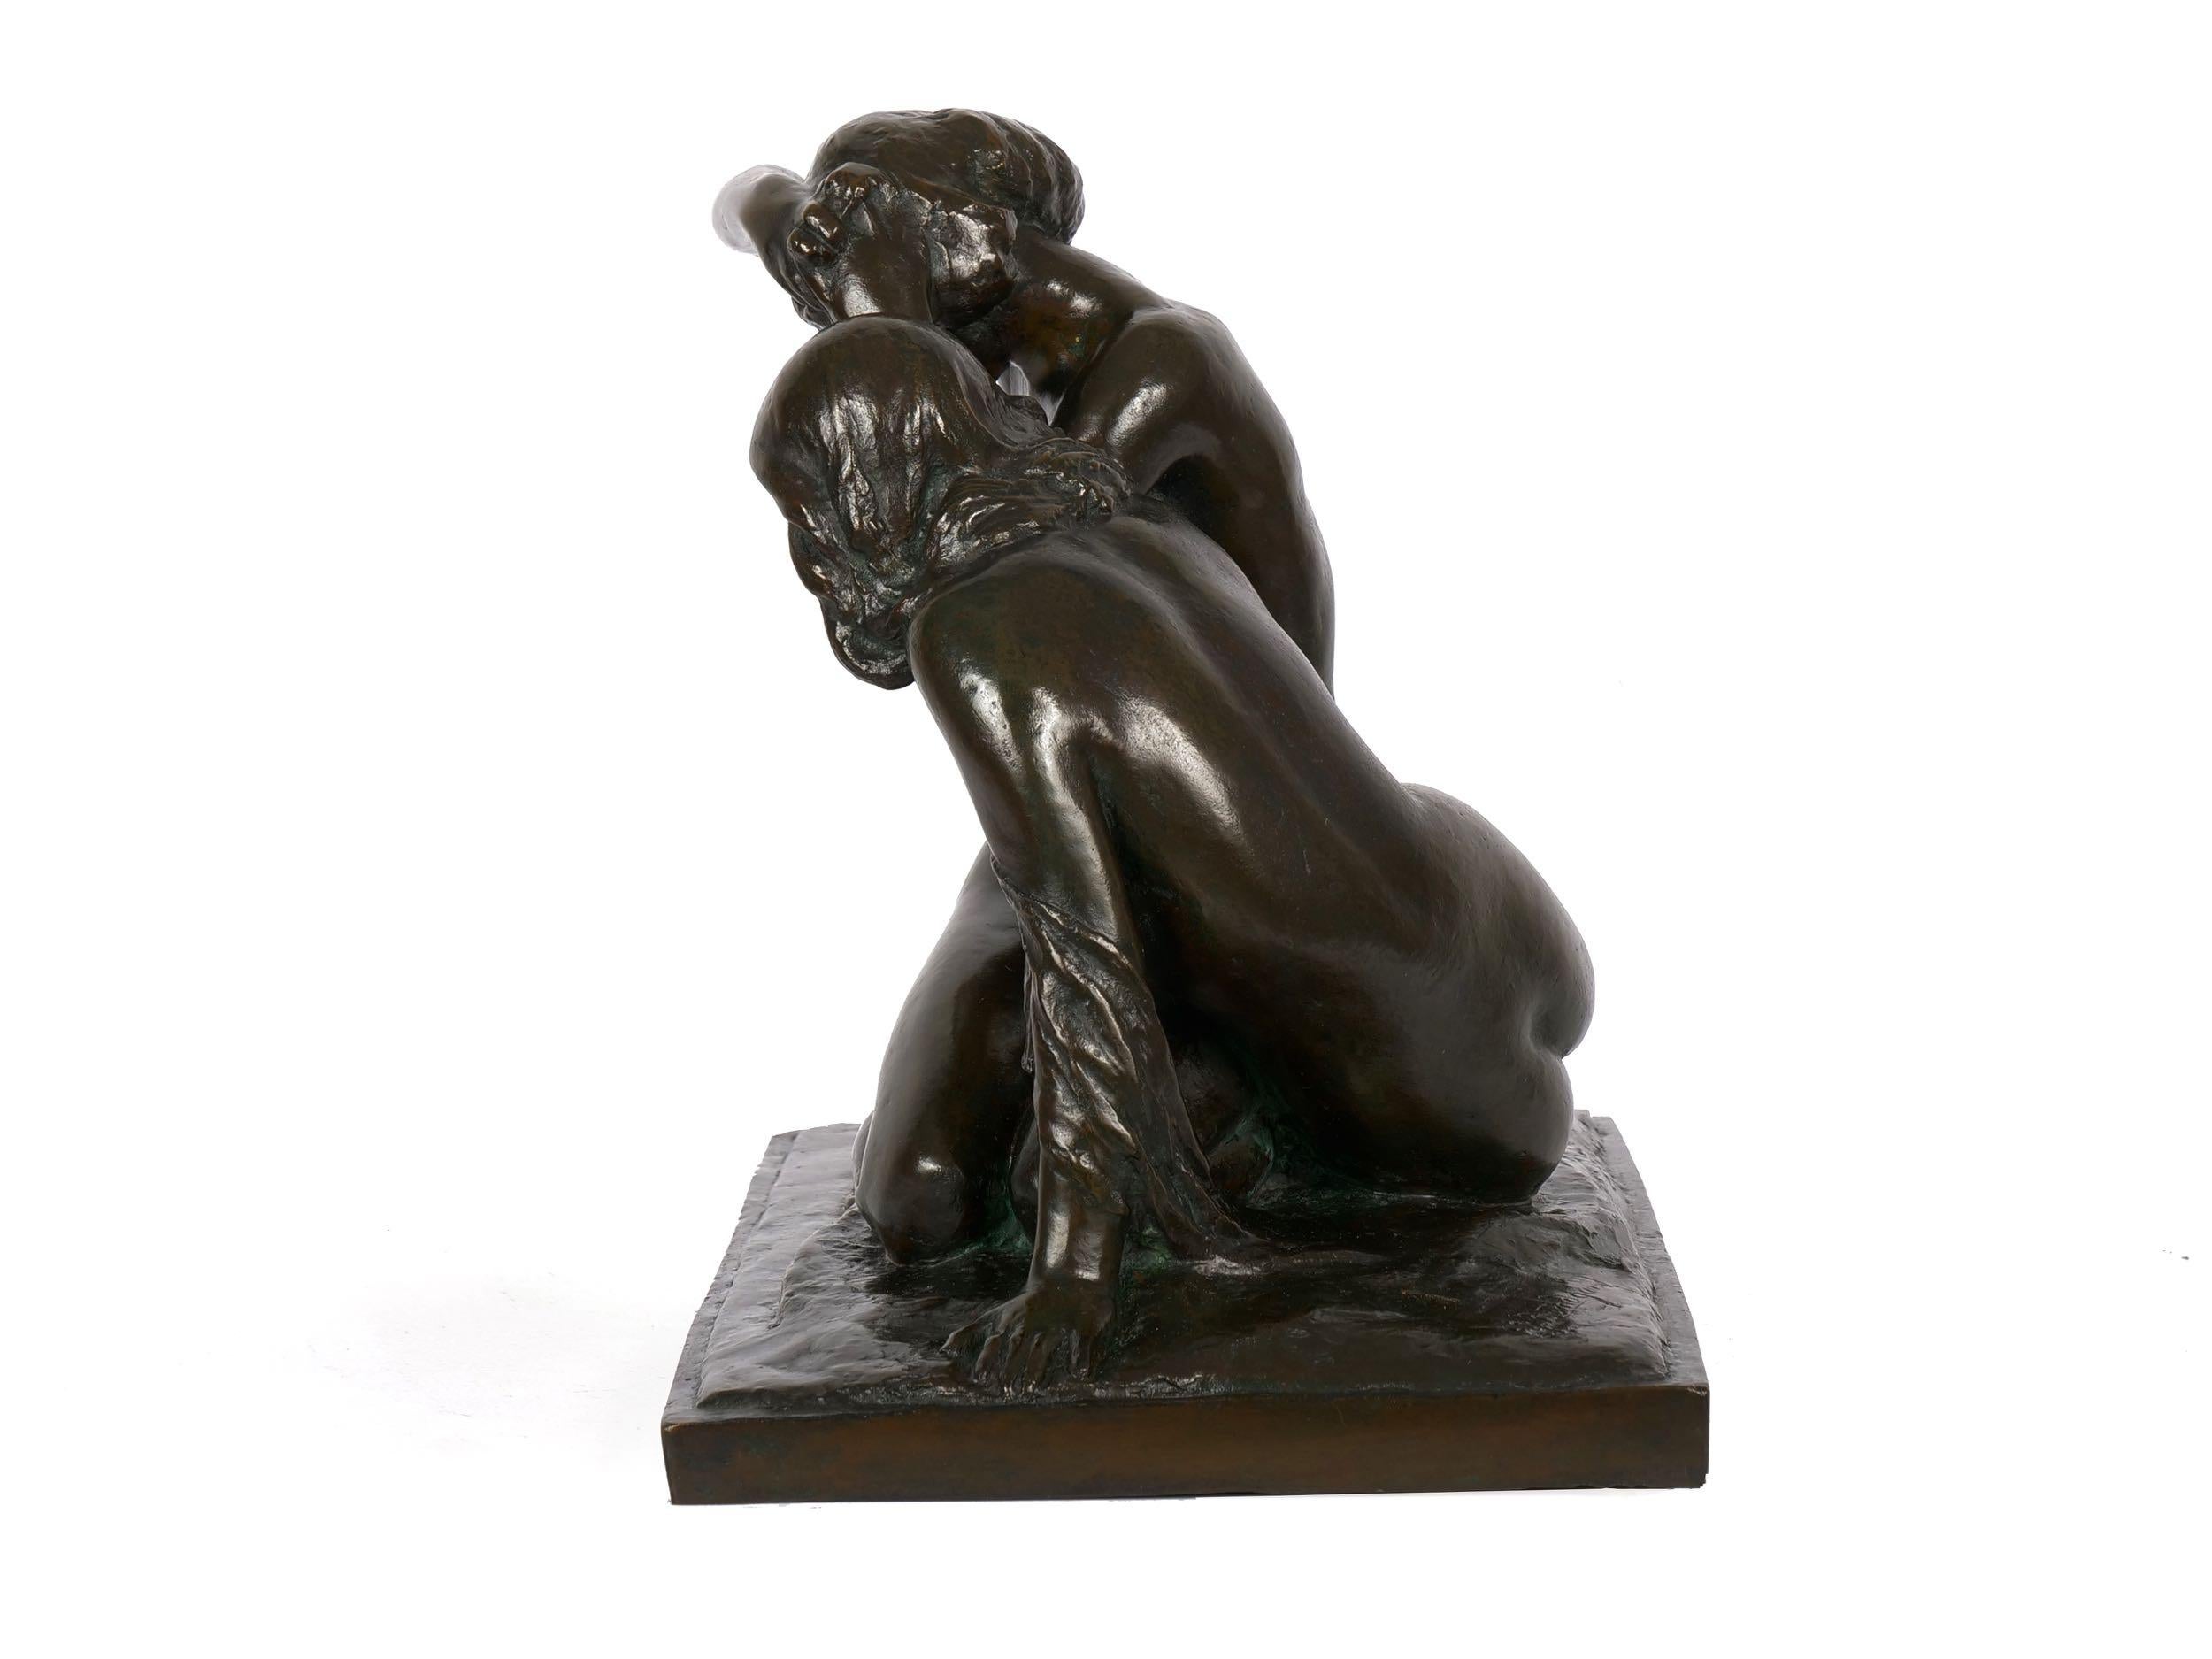 19th Century “Resting Figures” Danish Art Nouveau Bronze Sculpture by Anders Bundgaard